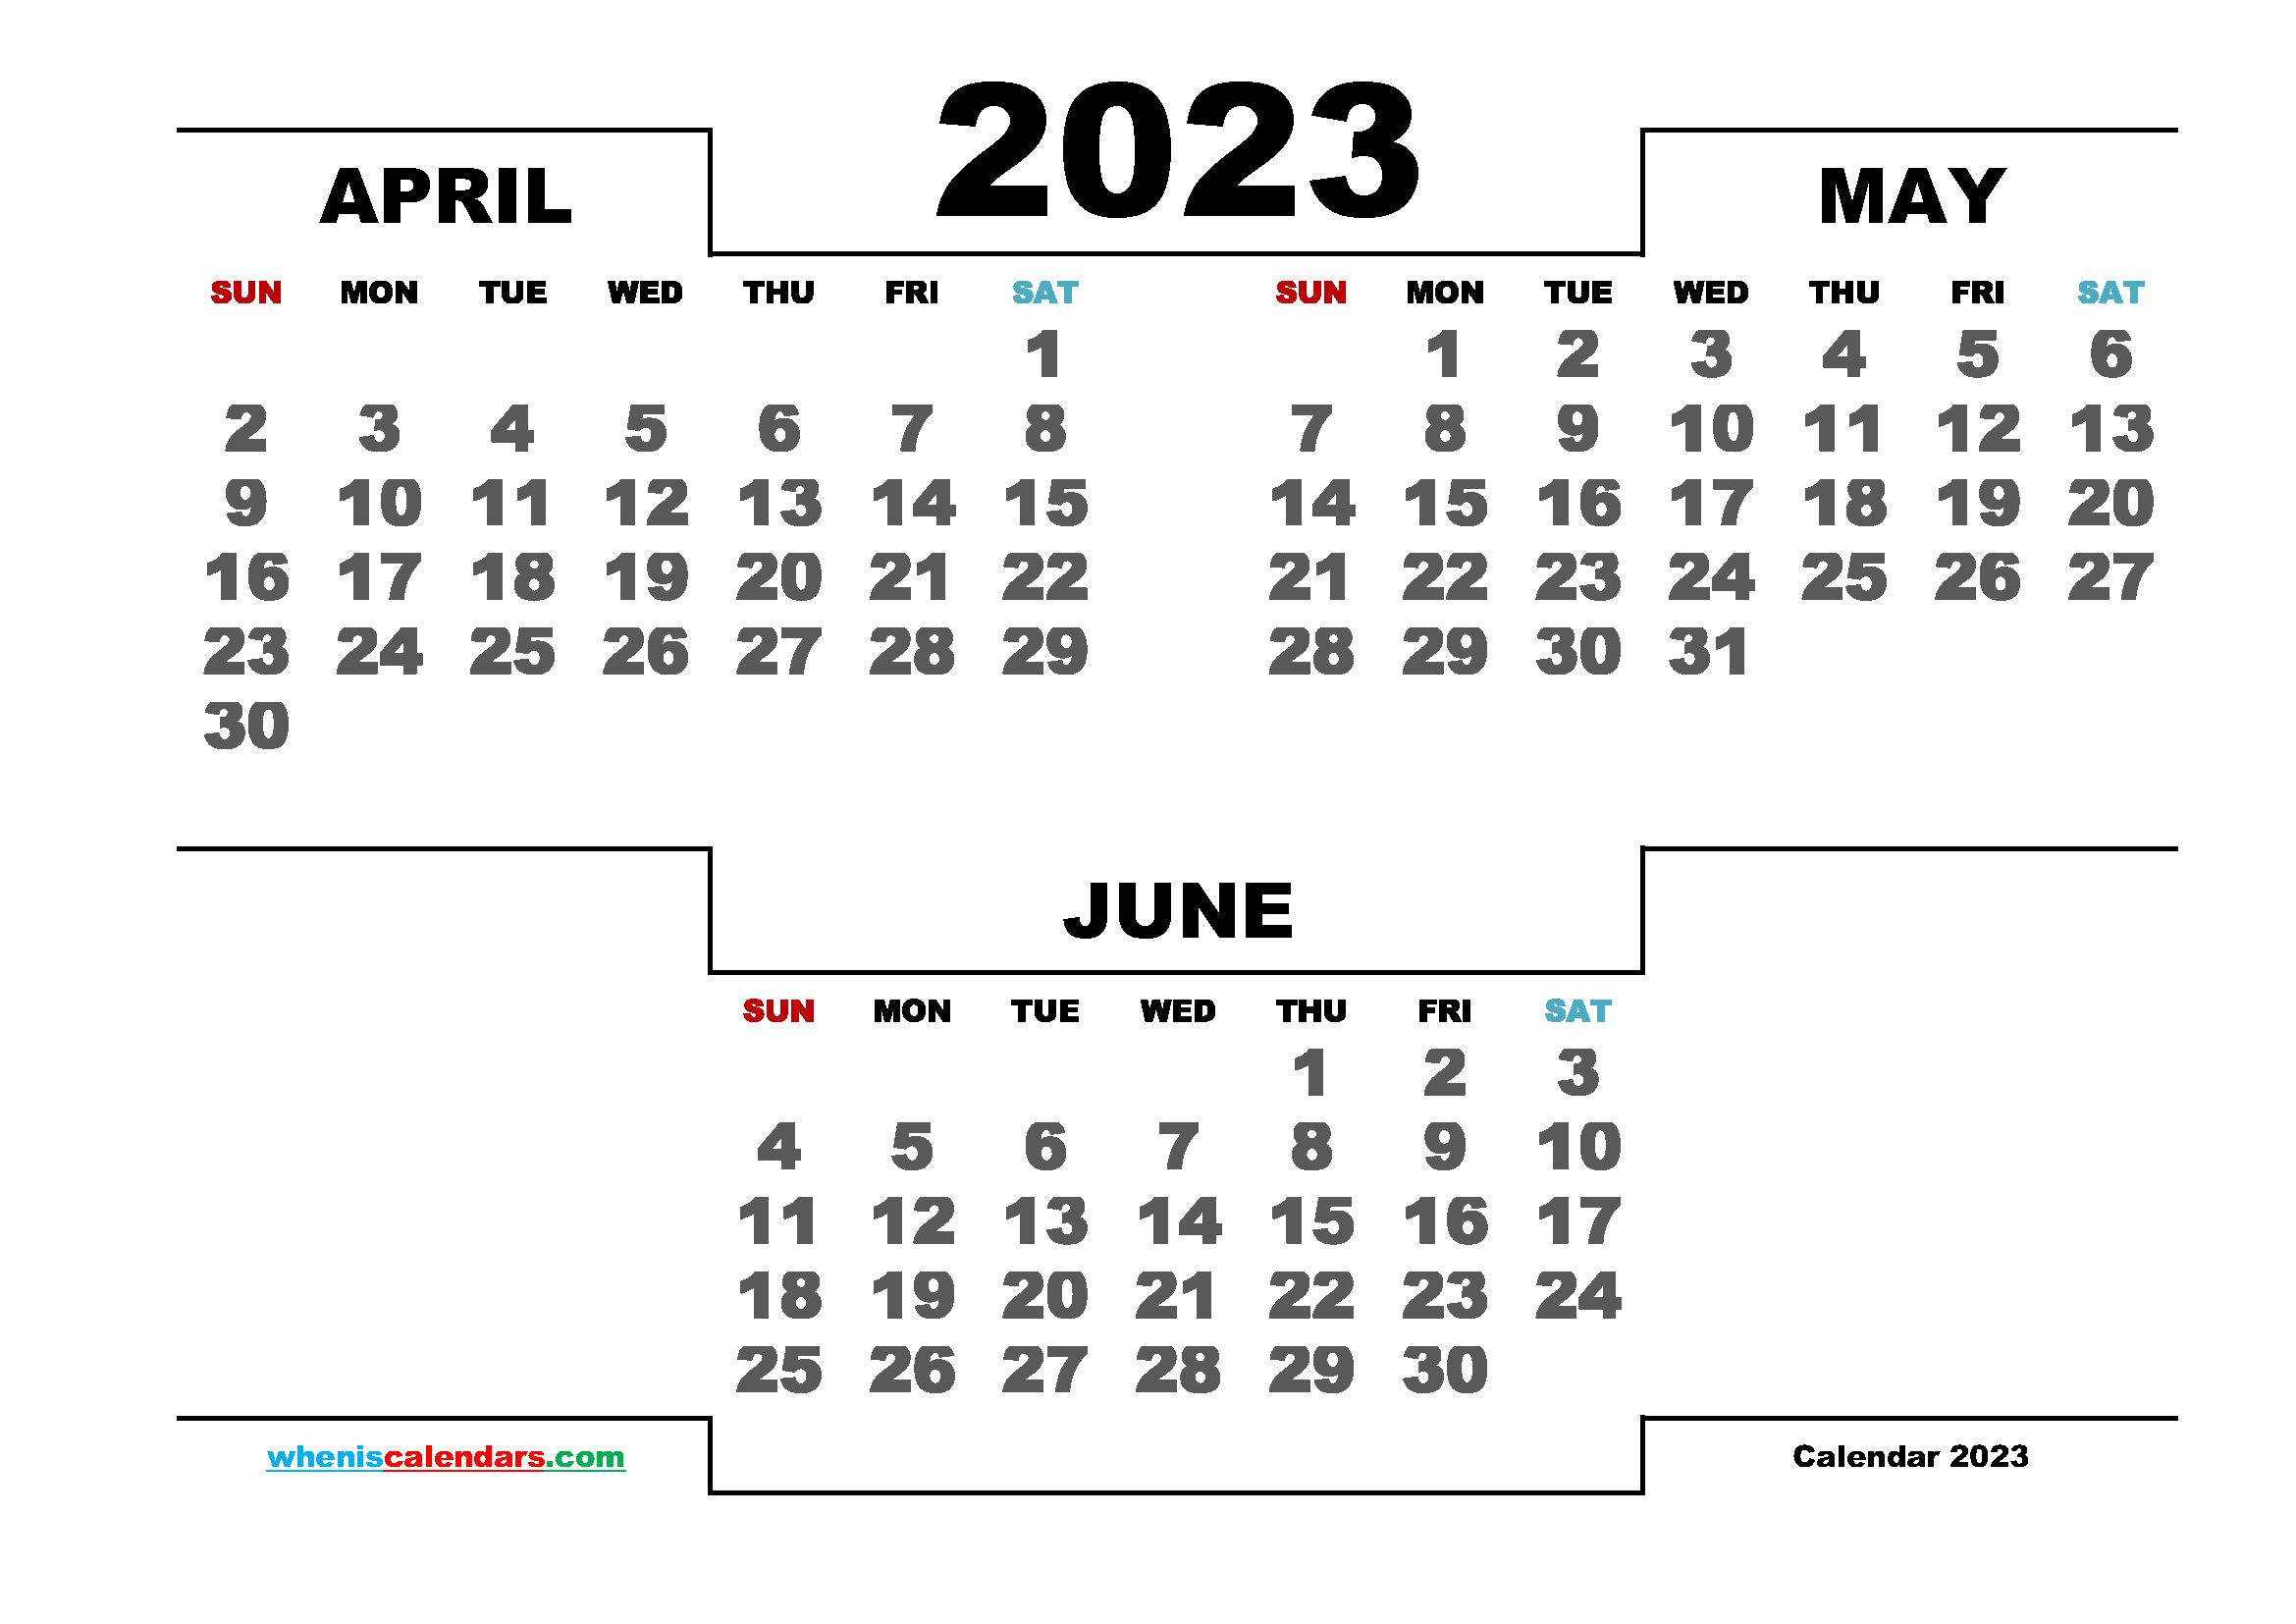 Blank June 2022 Calendar Printable